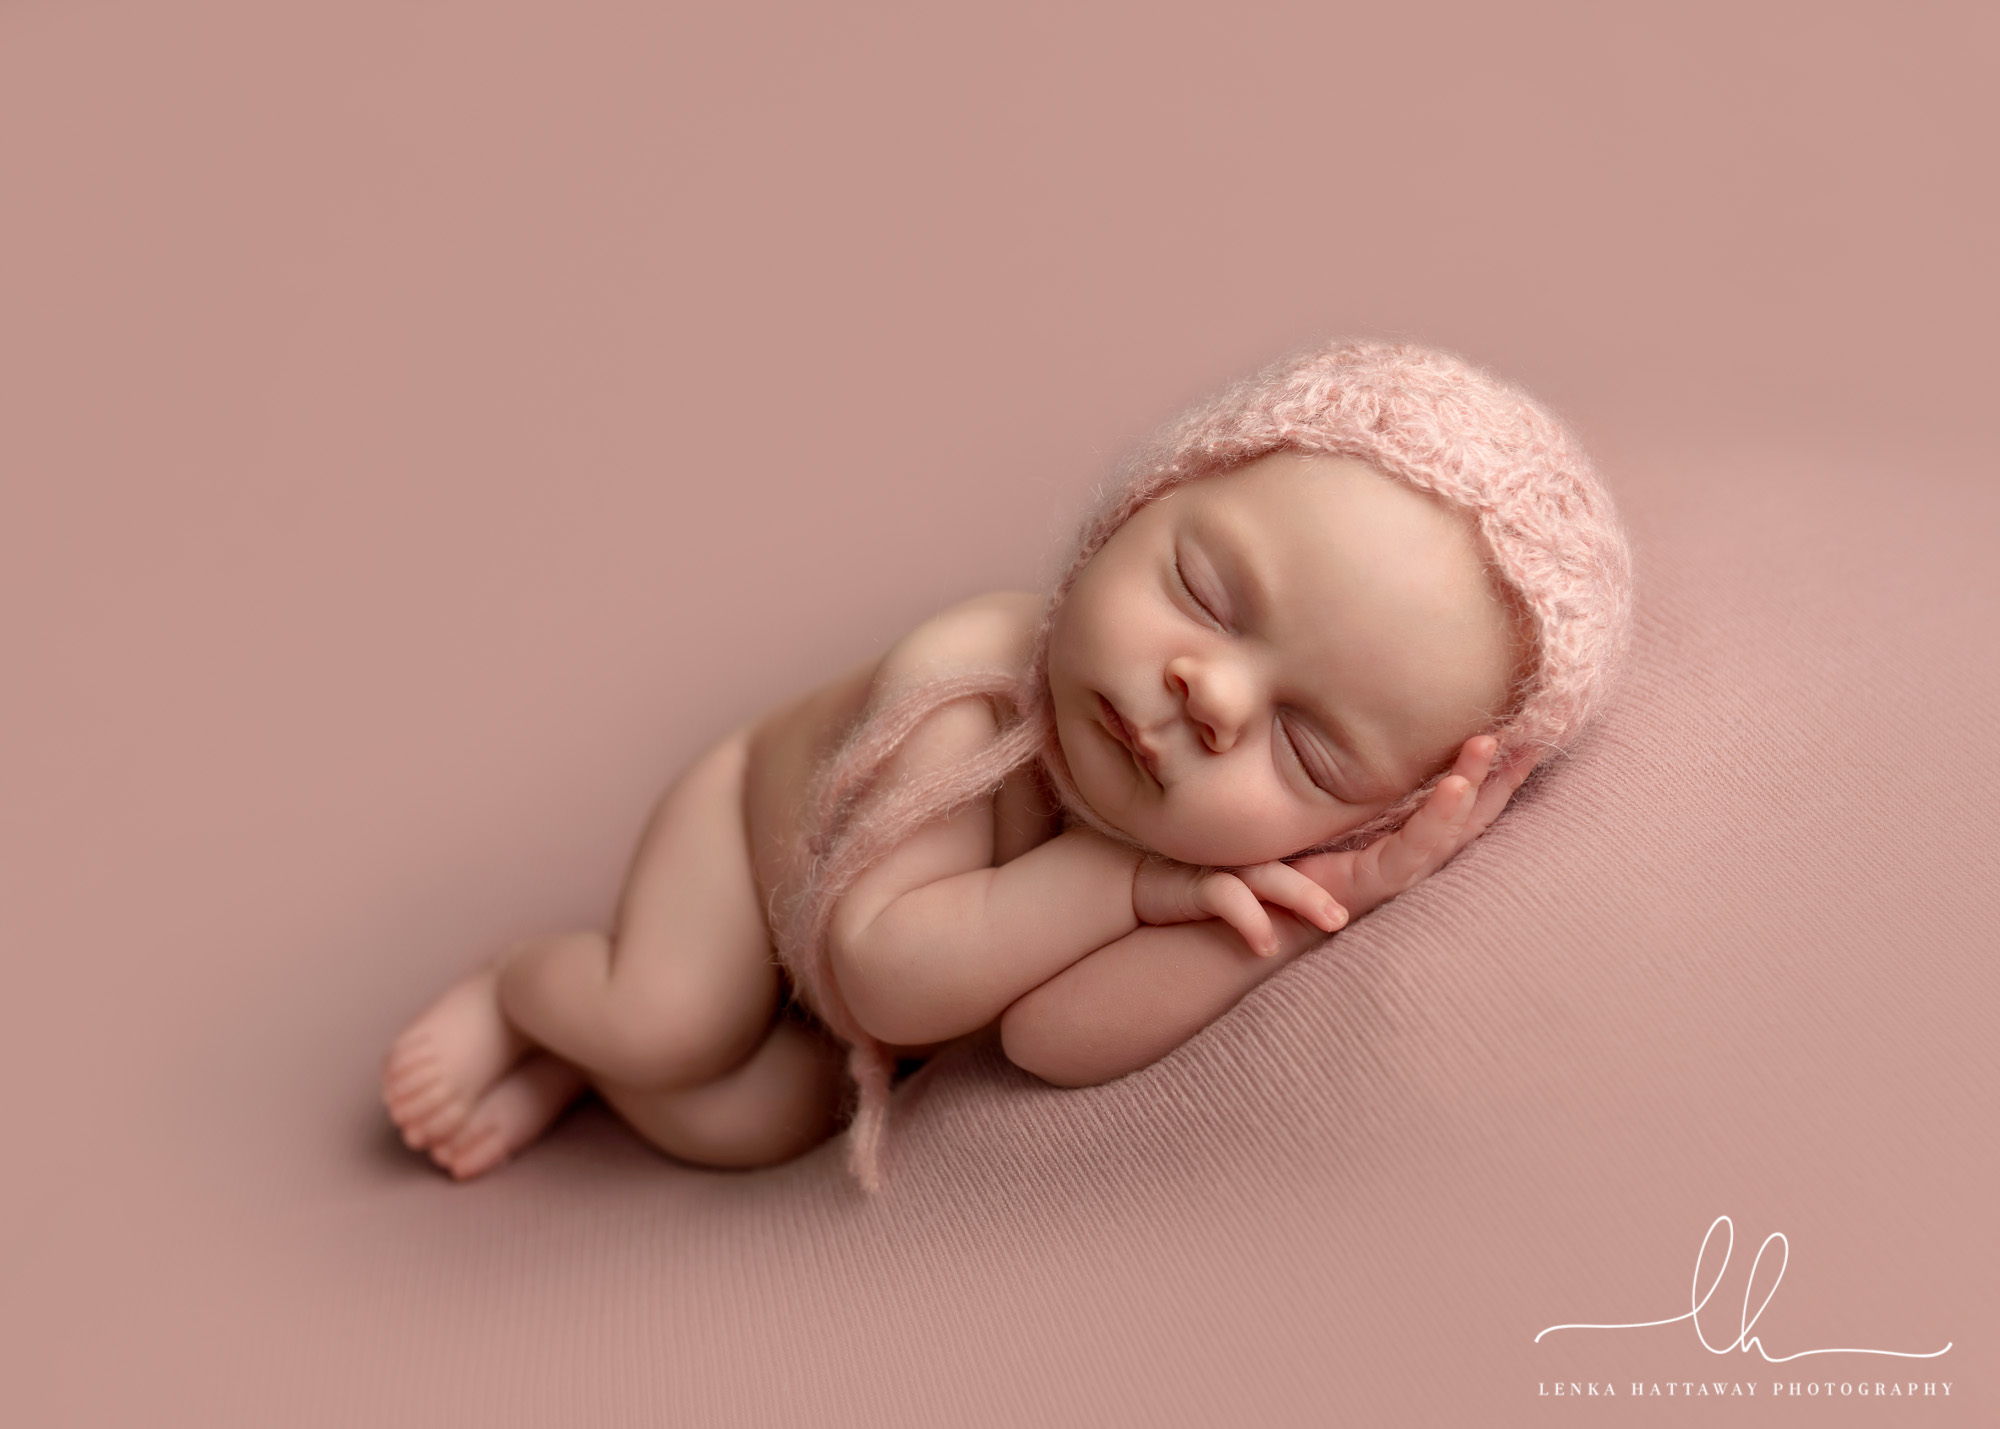 Newborn photo by Asheville Newborn Photographer, Lenka Hattaway.